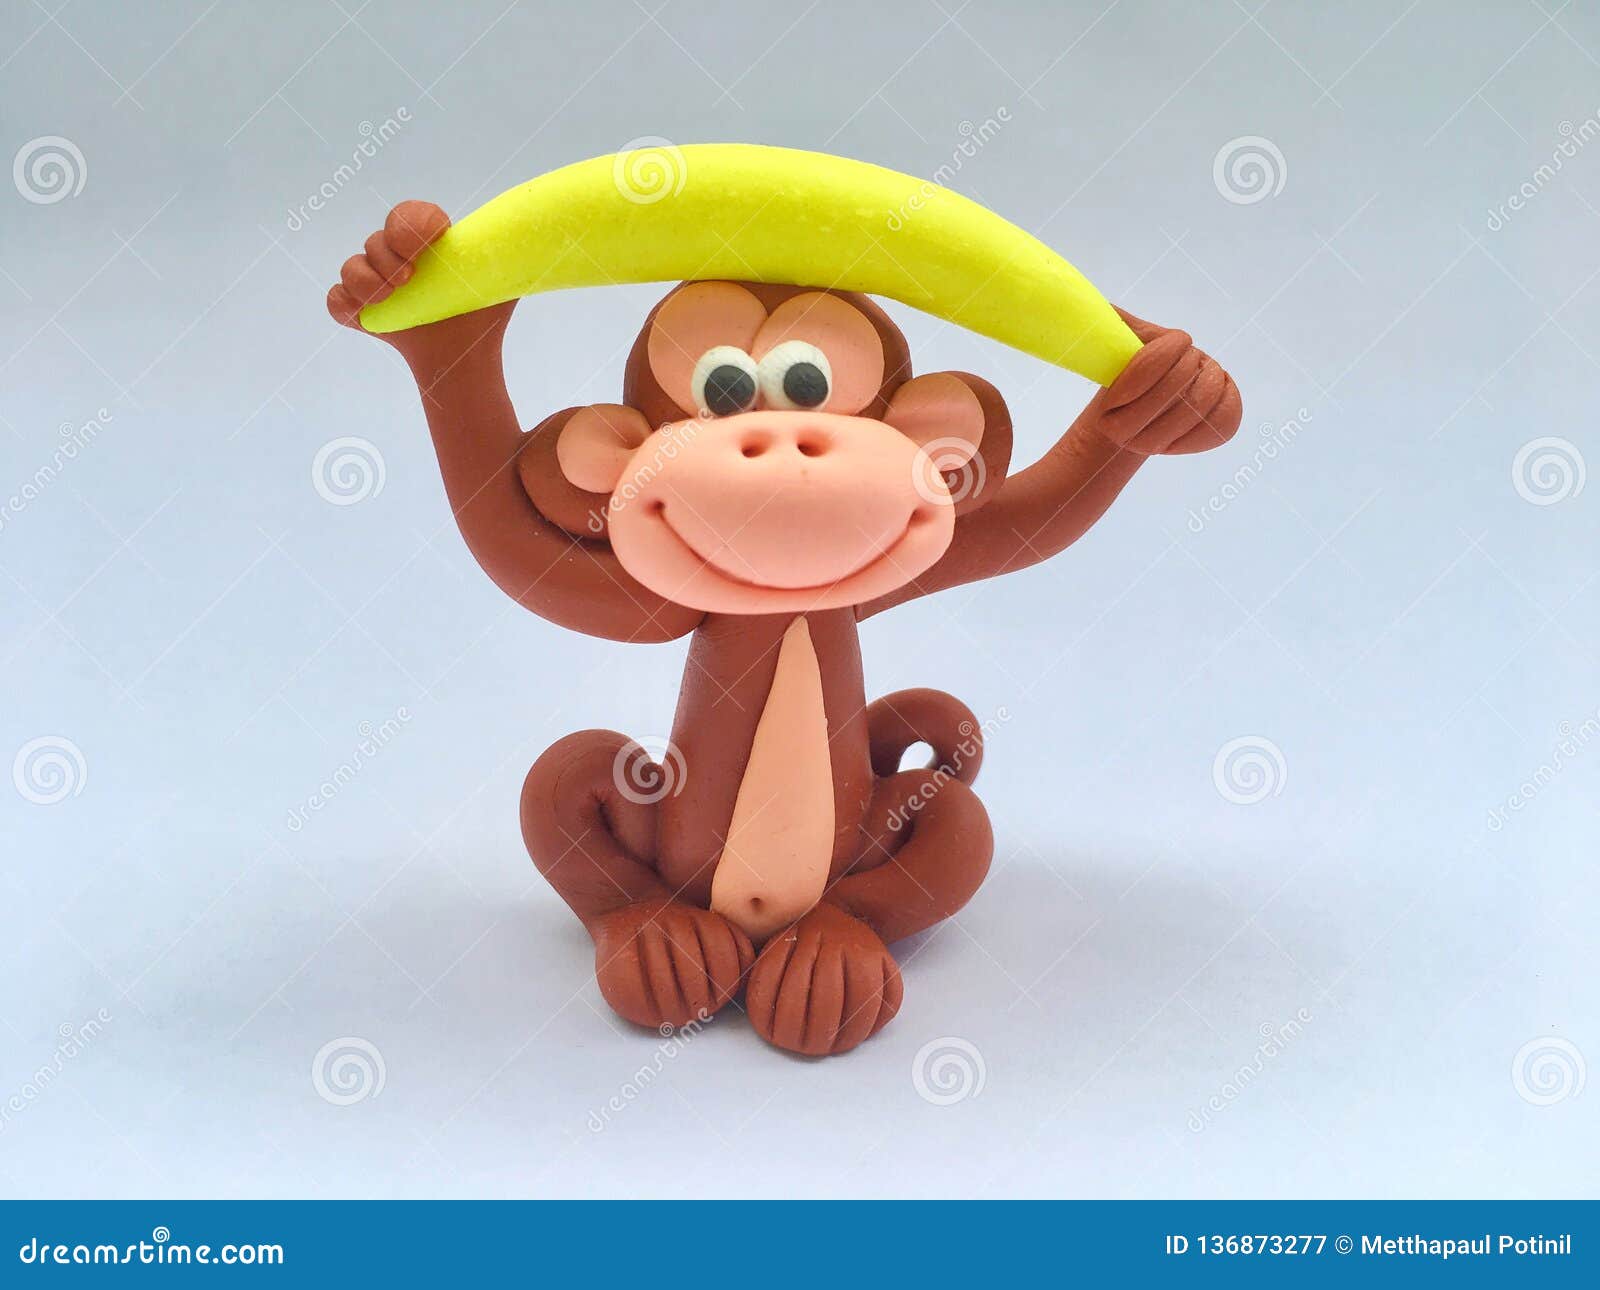 1,623 Monkey Cartoon Stock Photos - Free & Royalty-Free Stock Photos from  Dreamstime